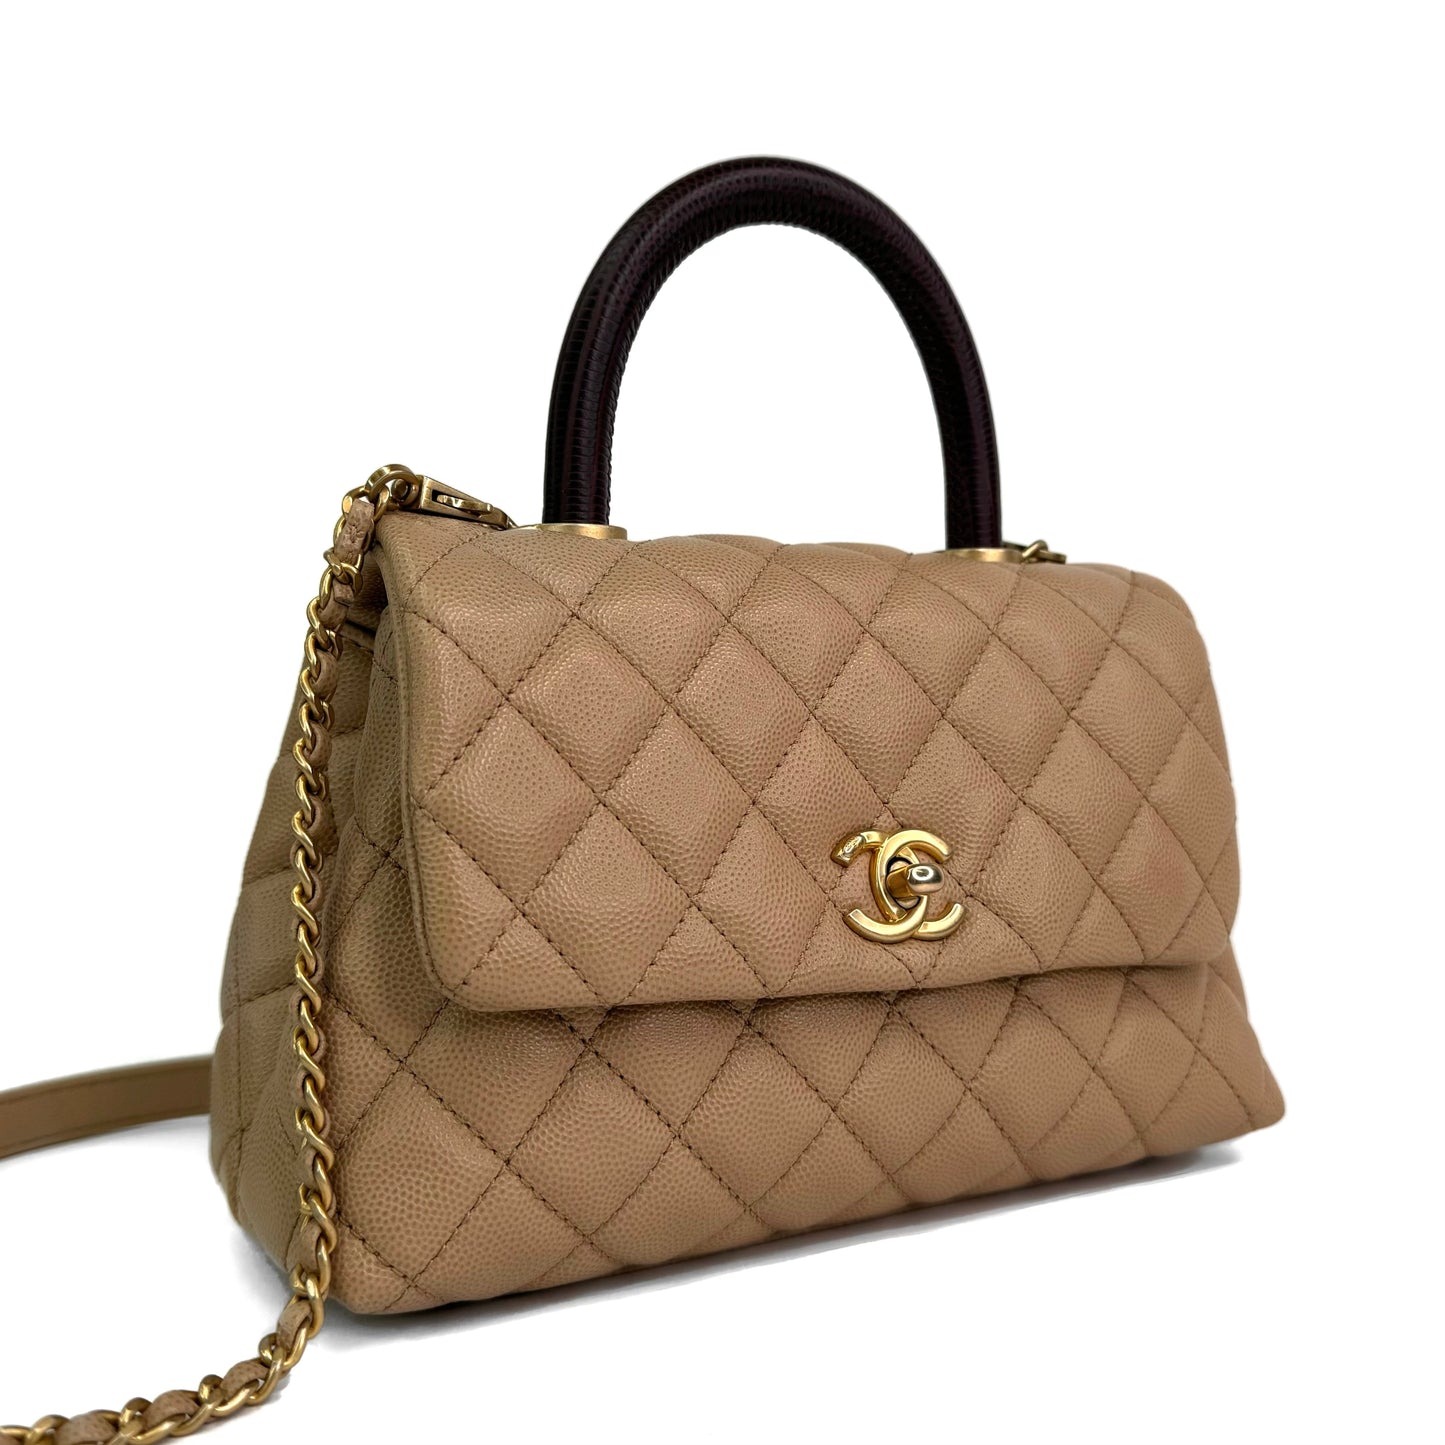 Chanel Coco Top Handle Small Bag